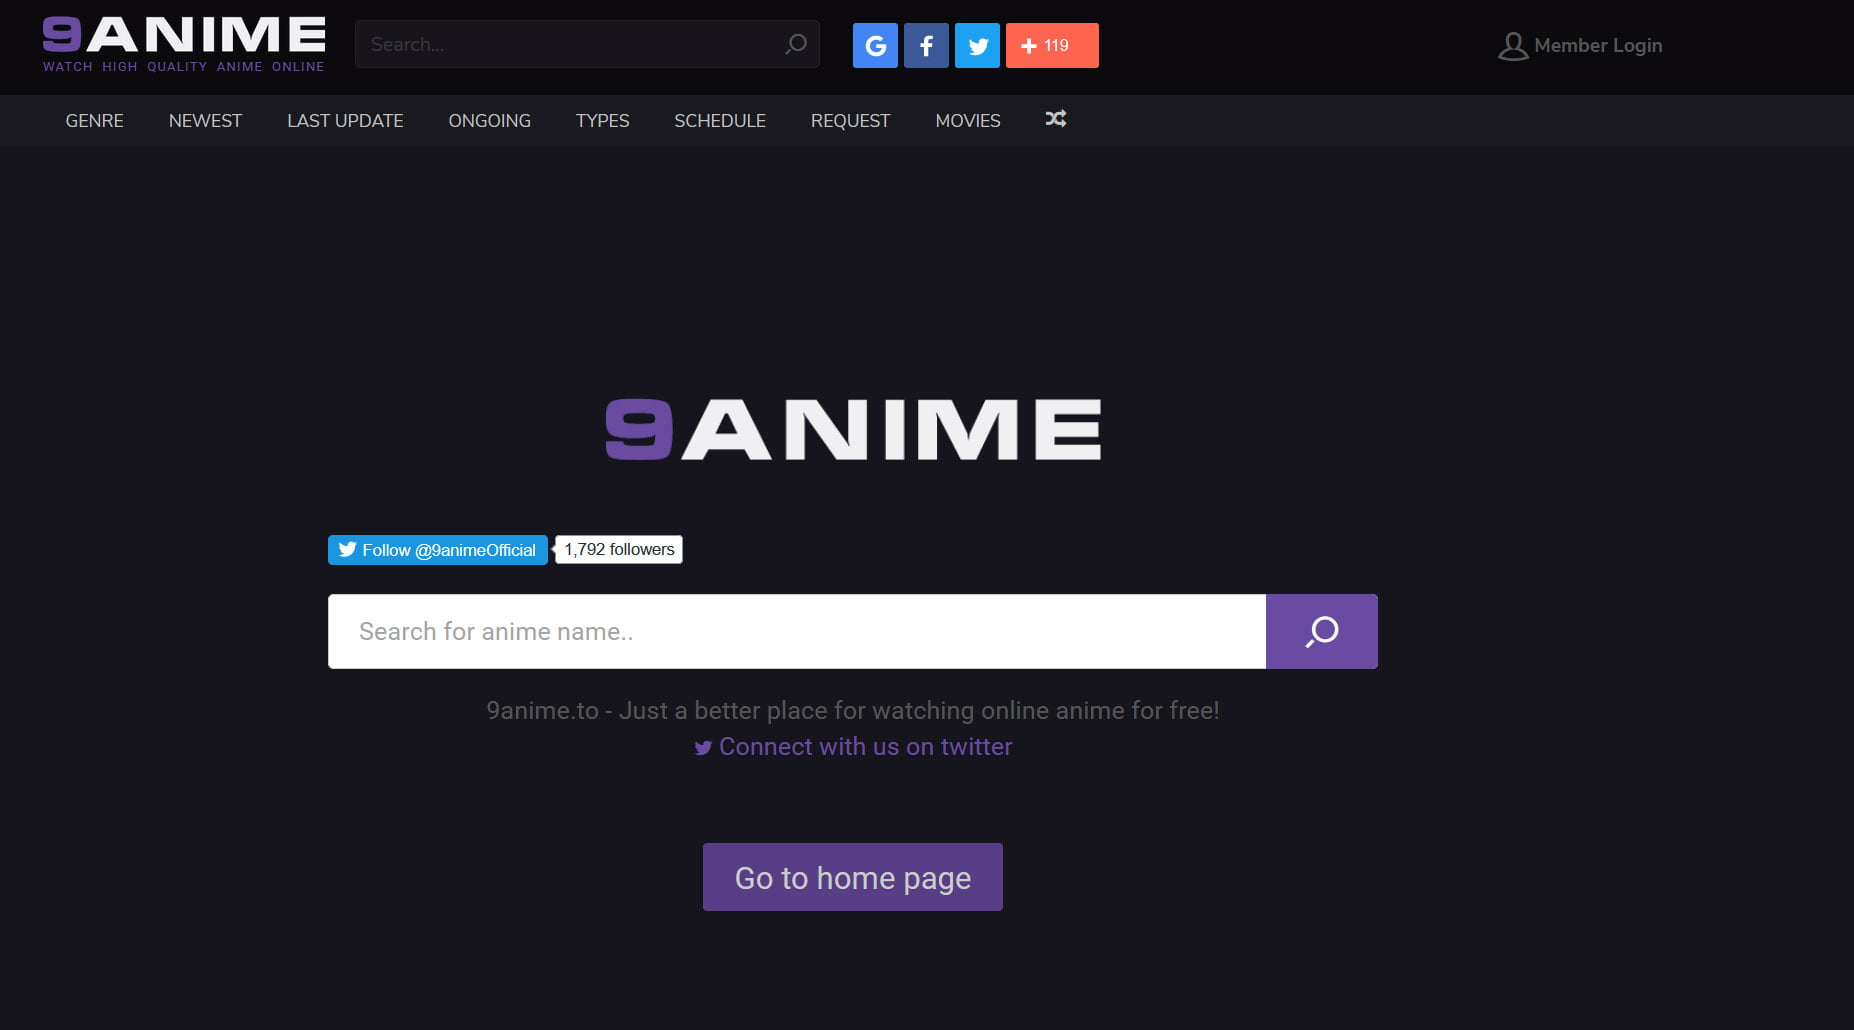 9anime is a free anime streaming platform